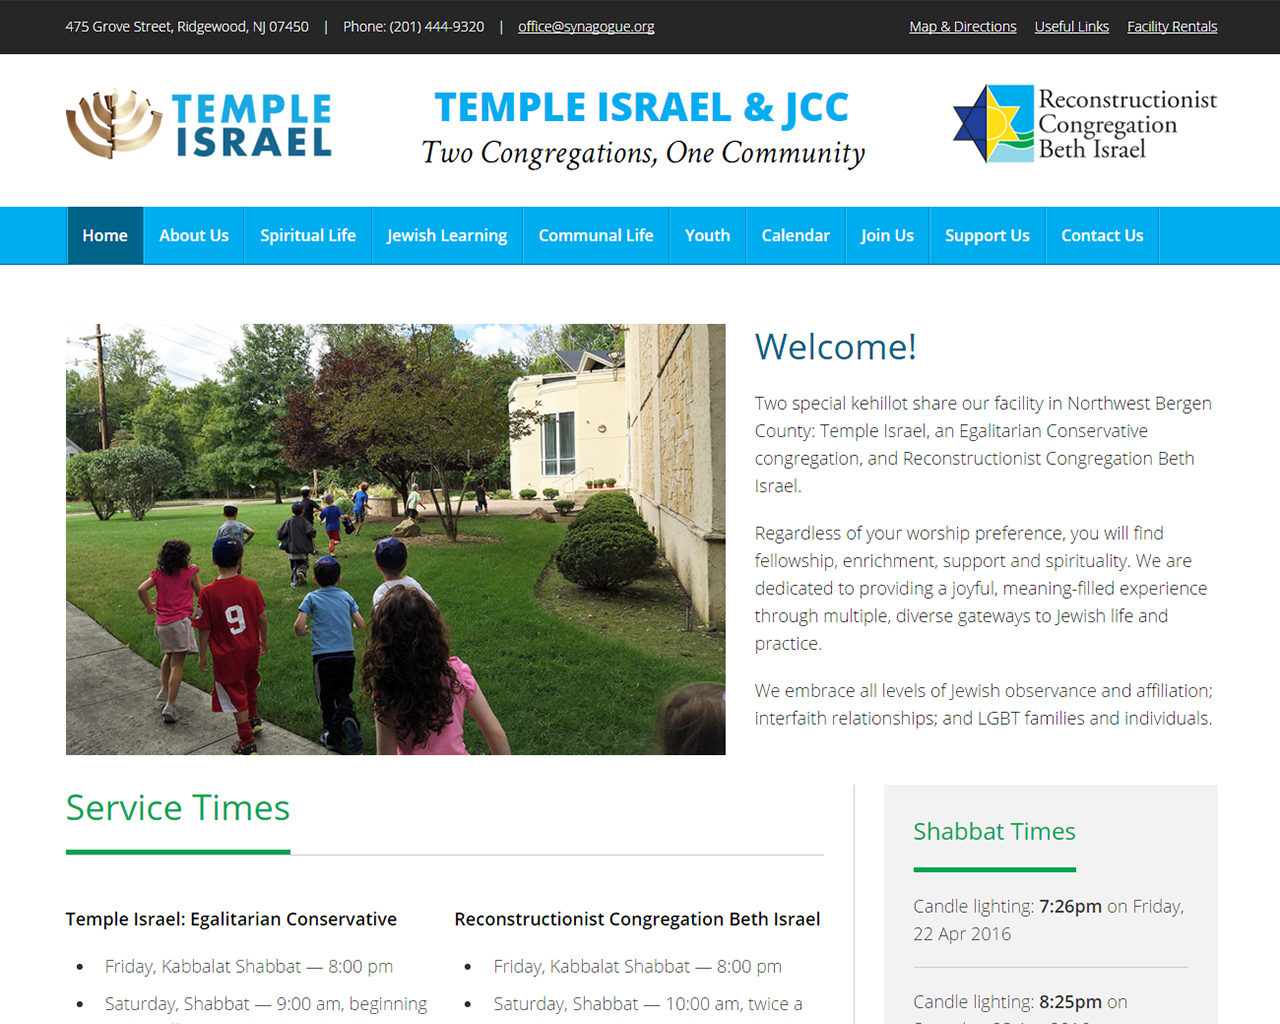 Temple Israel & JCC